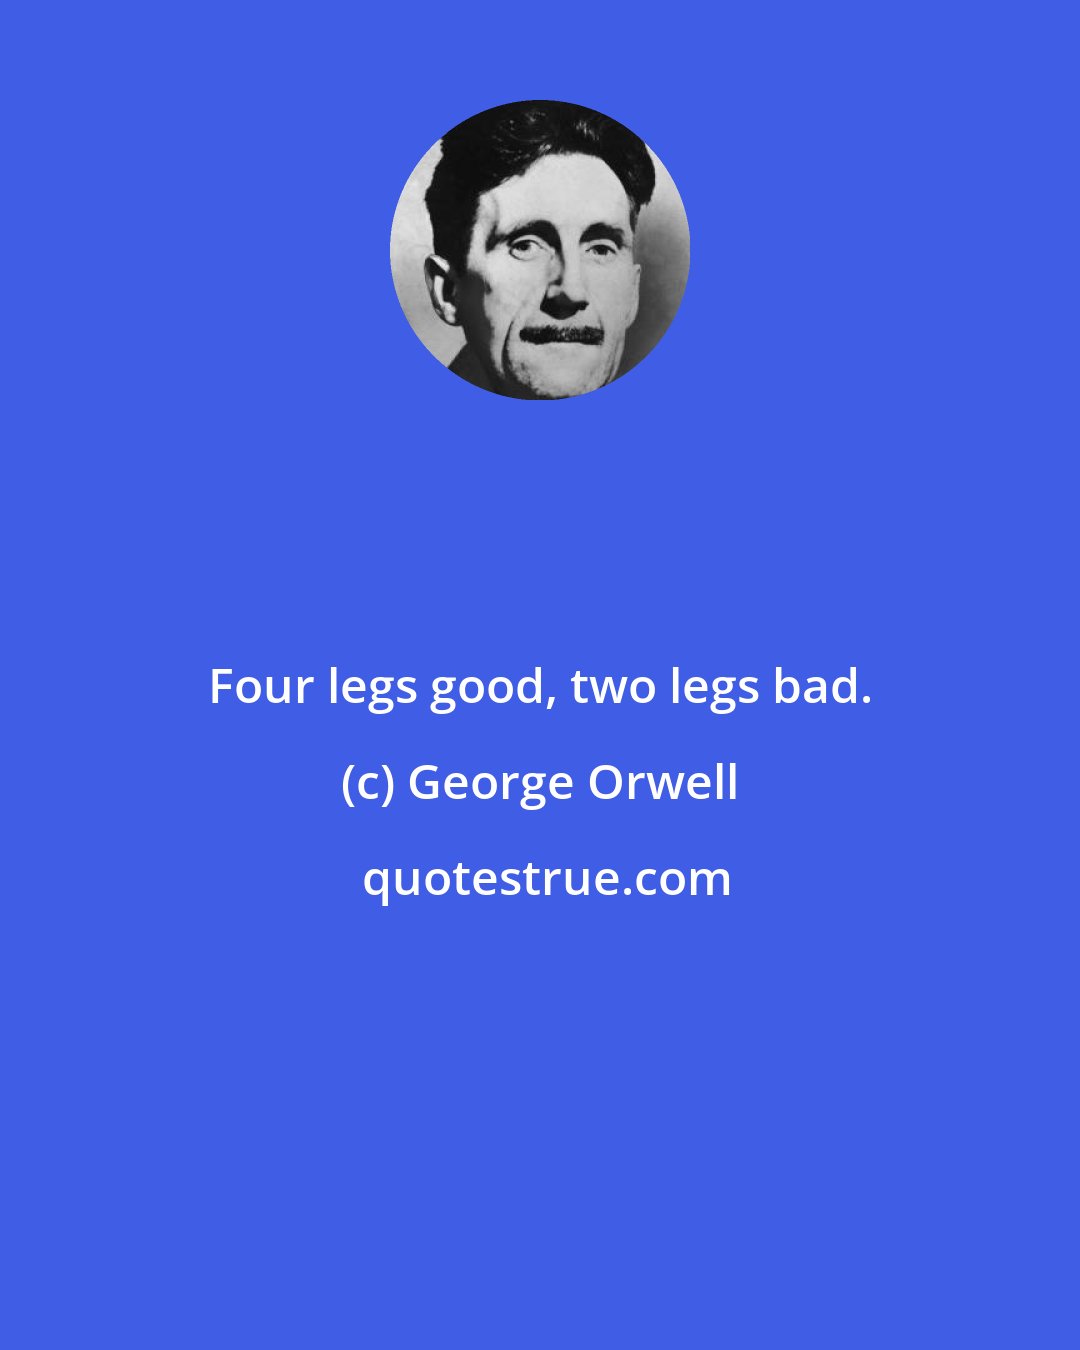 George Orwell: Four legs good, two legs bad.